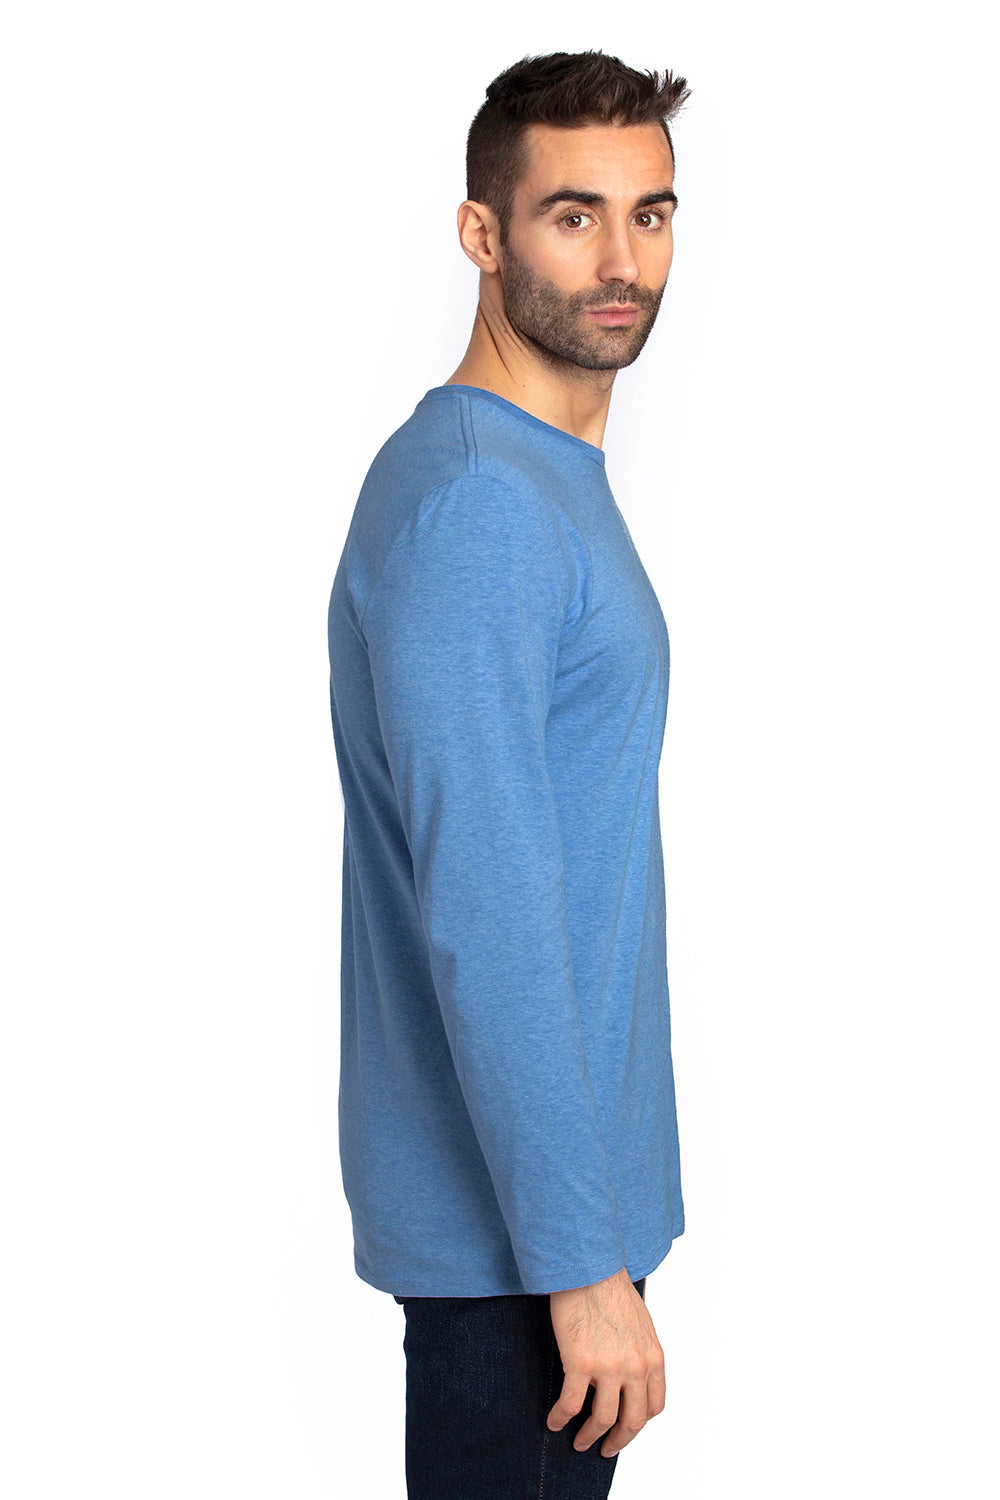 Threadfast Apparel 100LS Mens Ultimate Long Sleeve Crewneck T-Shirt Heather Royal Blue Side